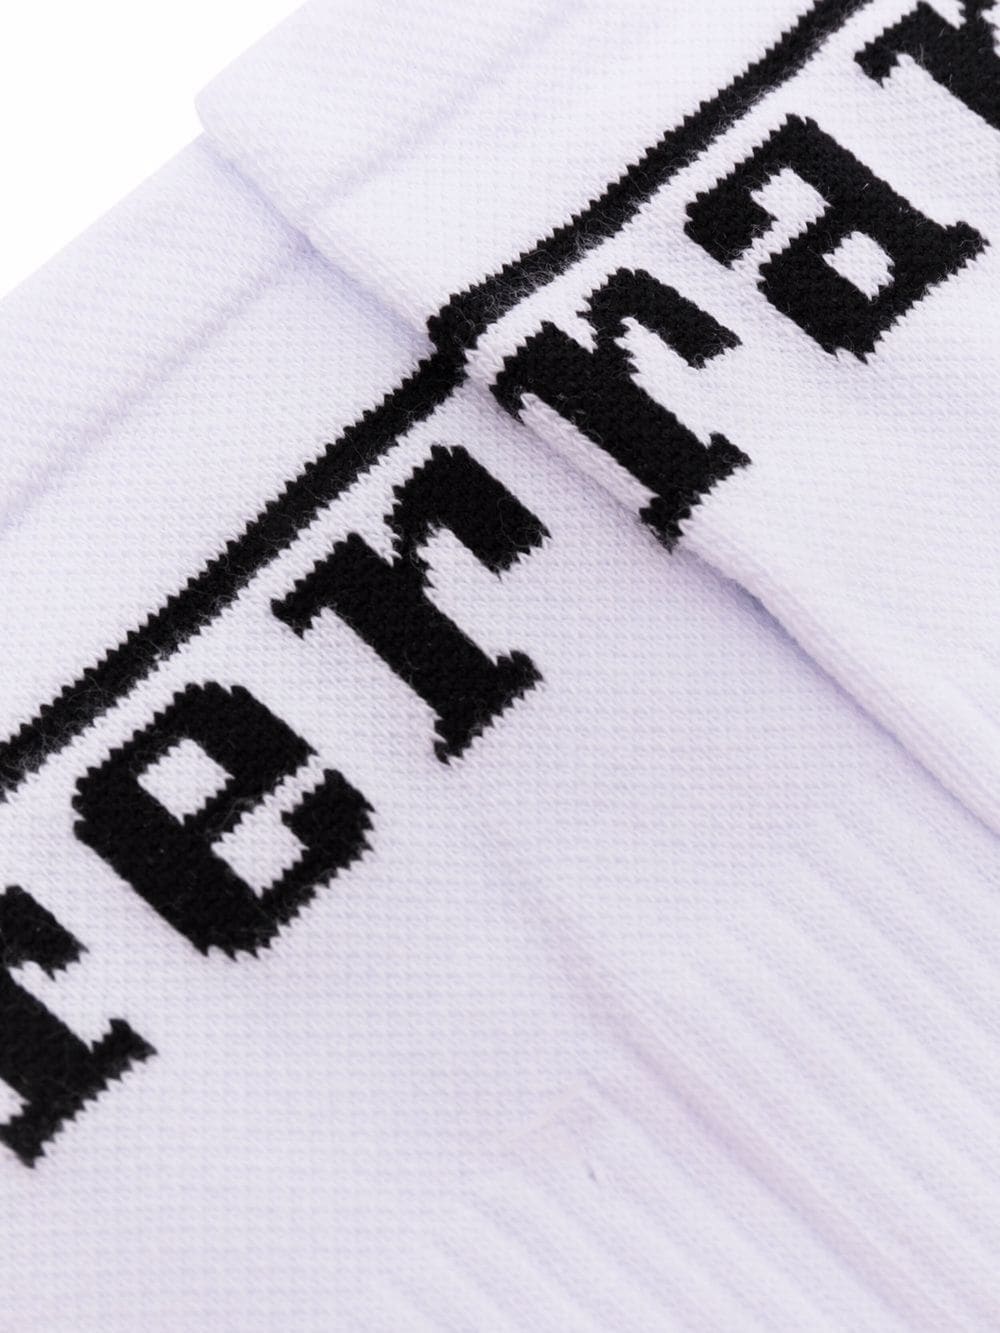 Shop Ferrari Logo-knit Socks